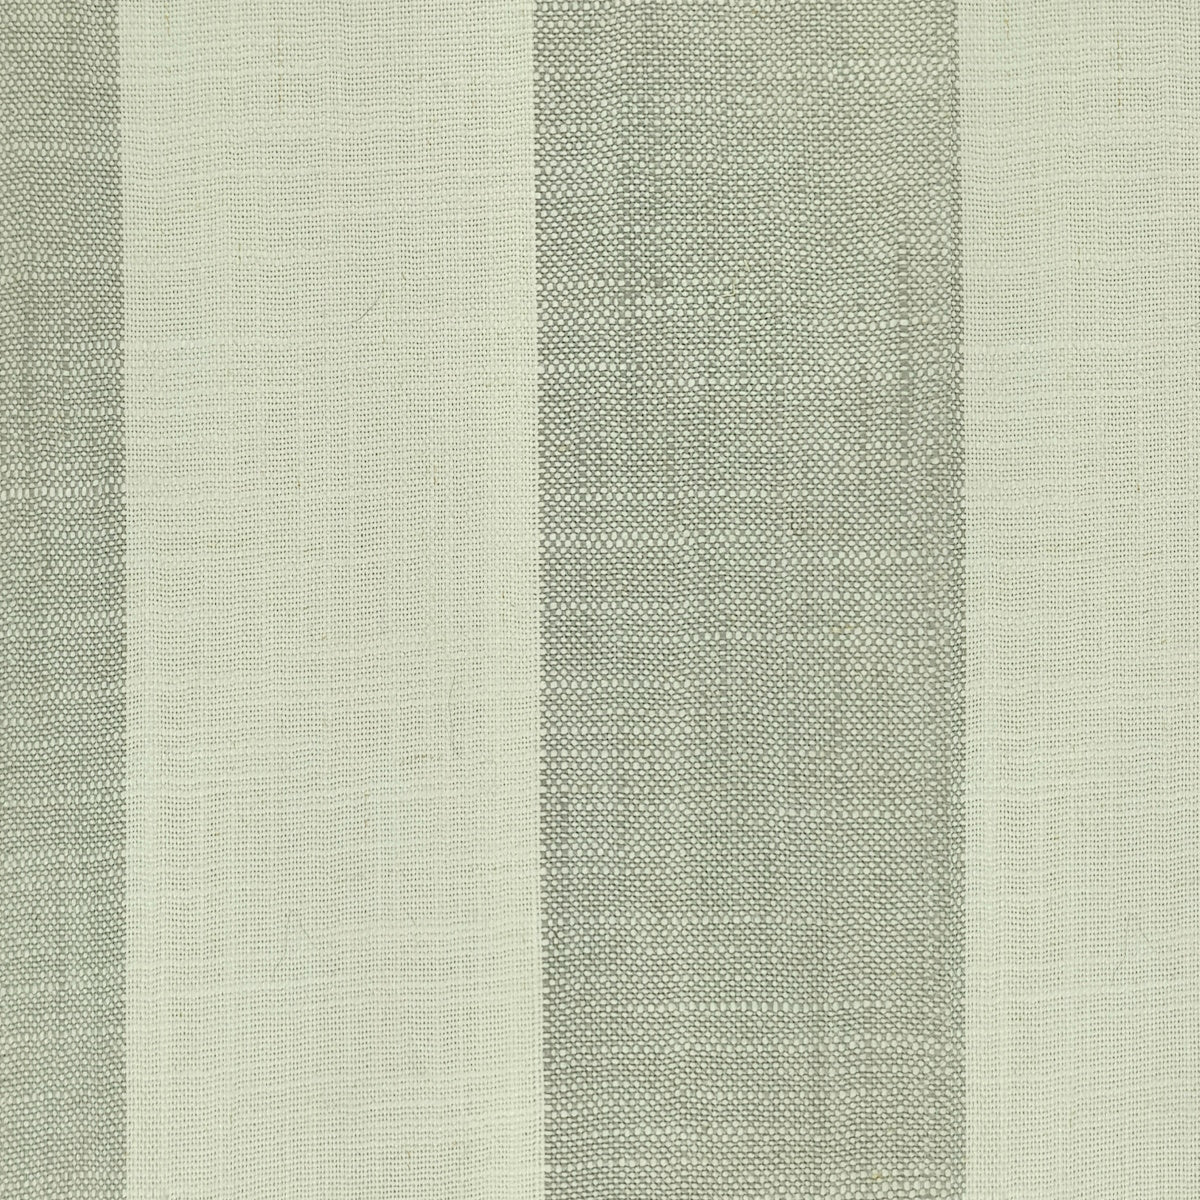 Rustic Farmhouse Stripe Drapery Fabric Pleasantdale Grey